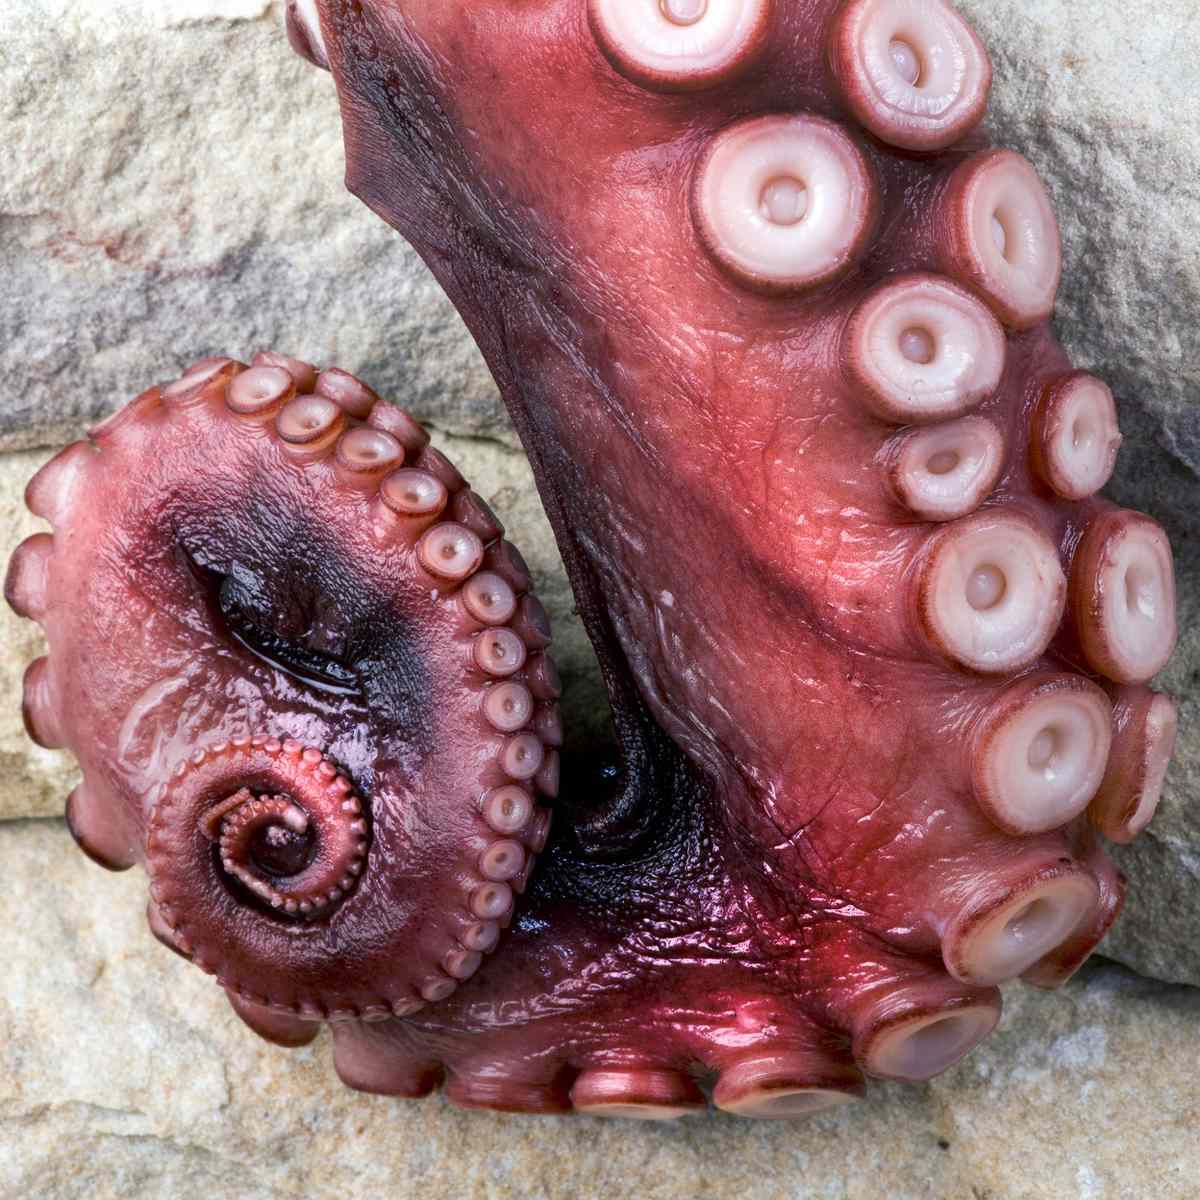 octopus-fwx